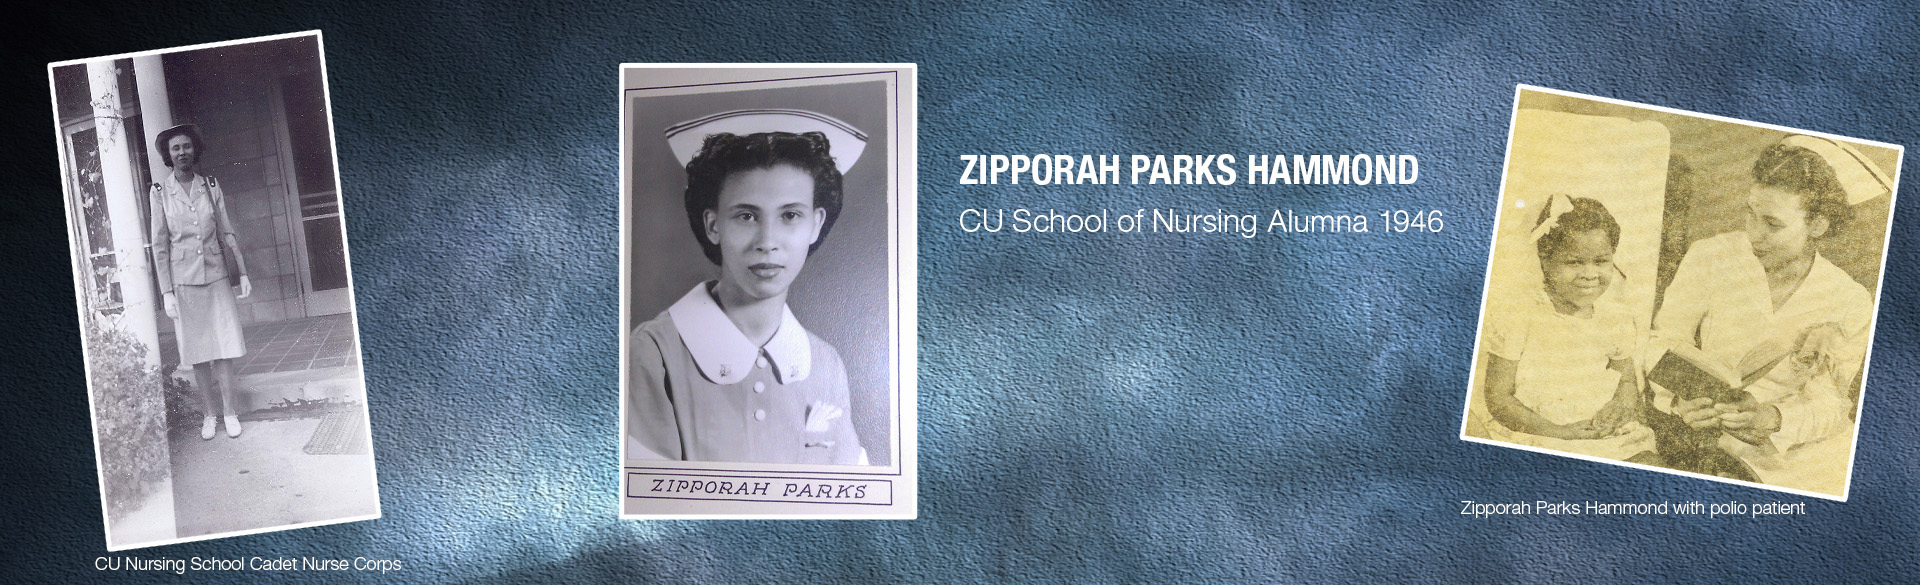 CU College of Nursing Alumna ‘Zippy’ Zipporah Parks Hammond 1946